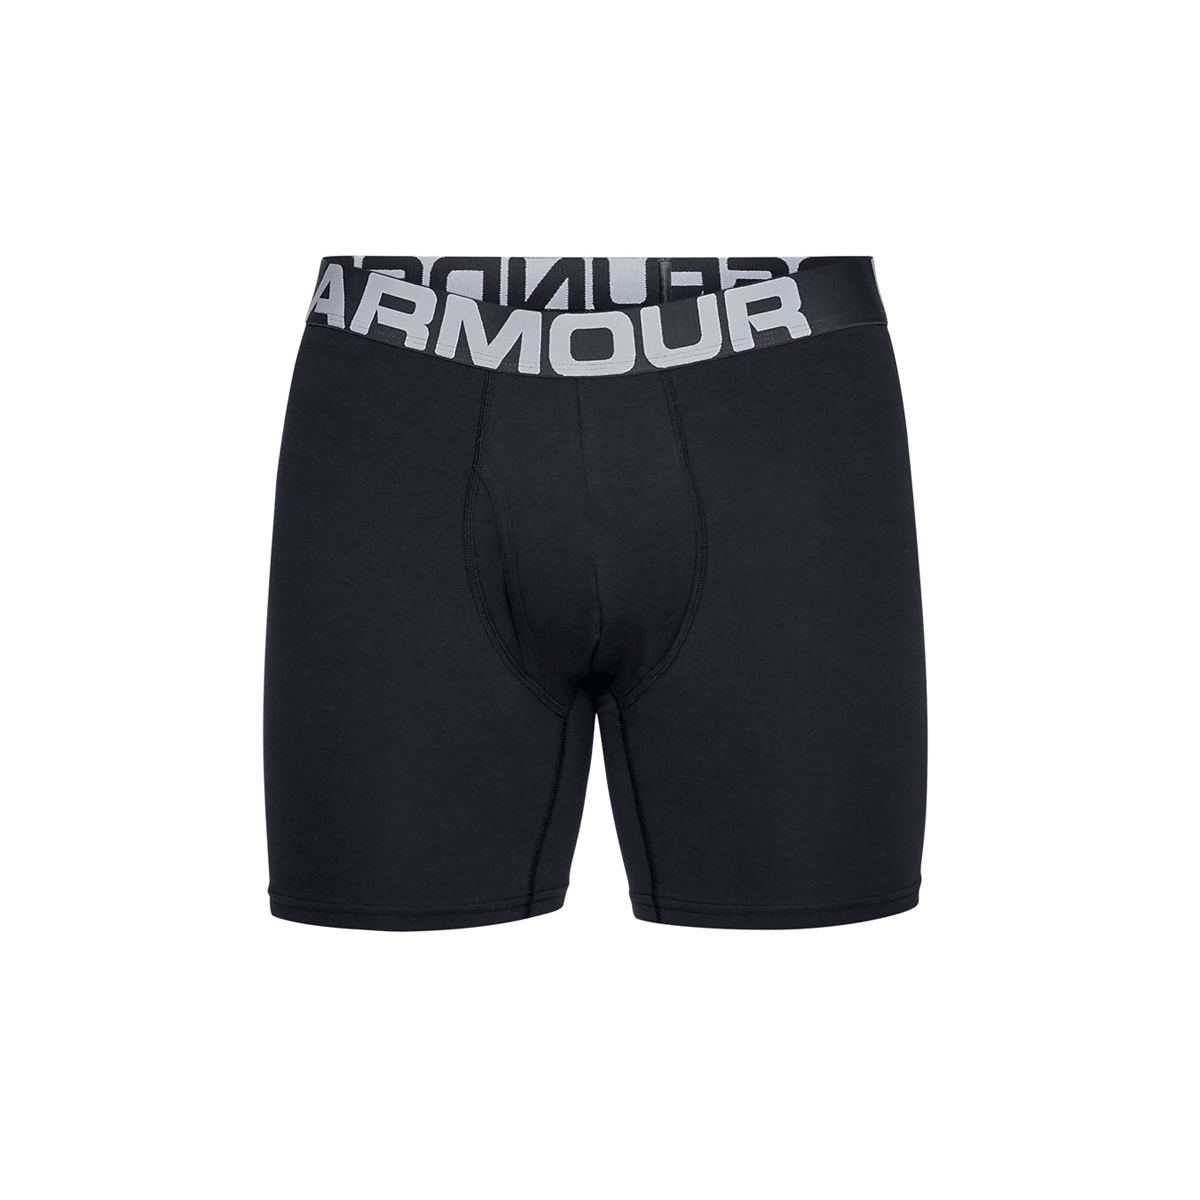 Optimum Men's Tackle Trunks Sports Underwear 